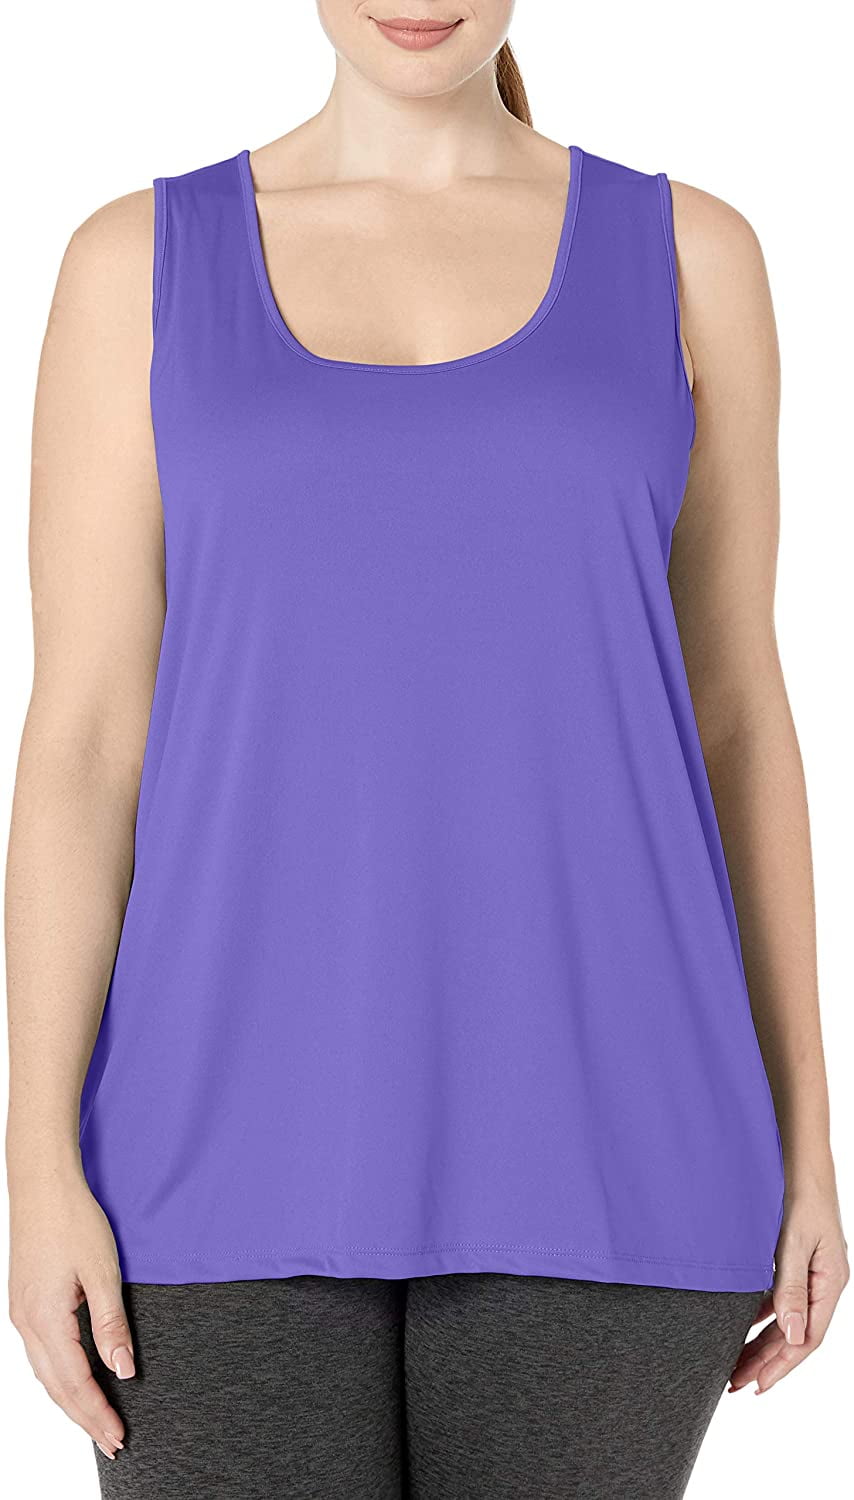 Overholdelse af Billy voksen esafio - esafio Women's Plus-Size Tank Sleeveless Top Square Collar T Shirt,  Purple - Walmart.com - Walmart.com